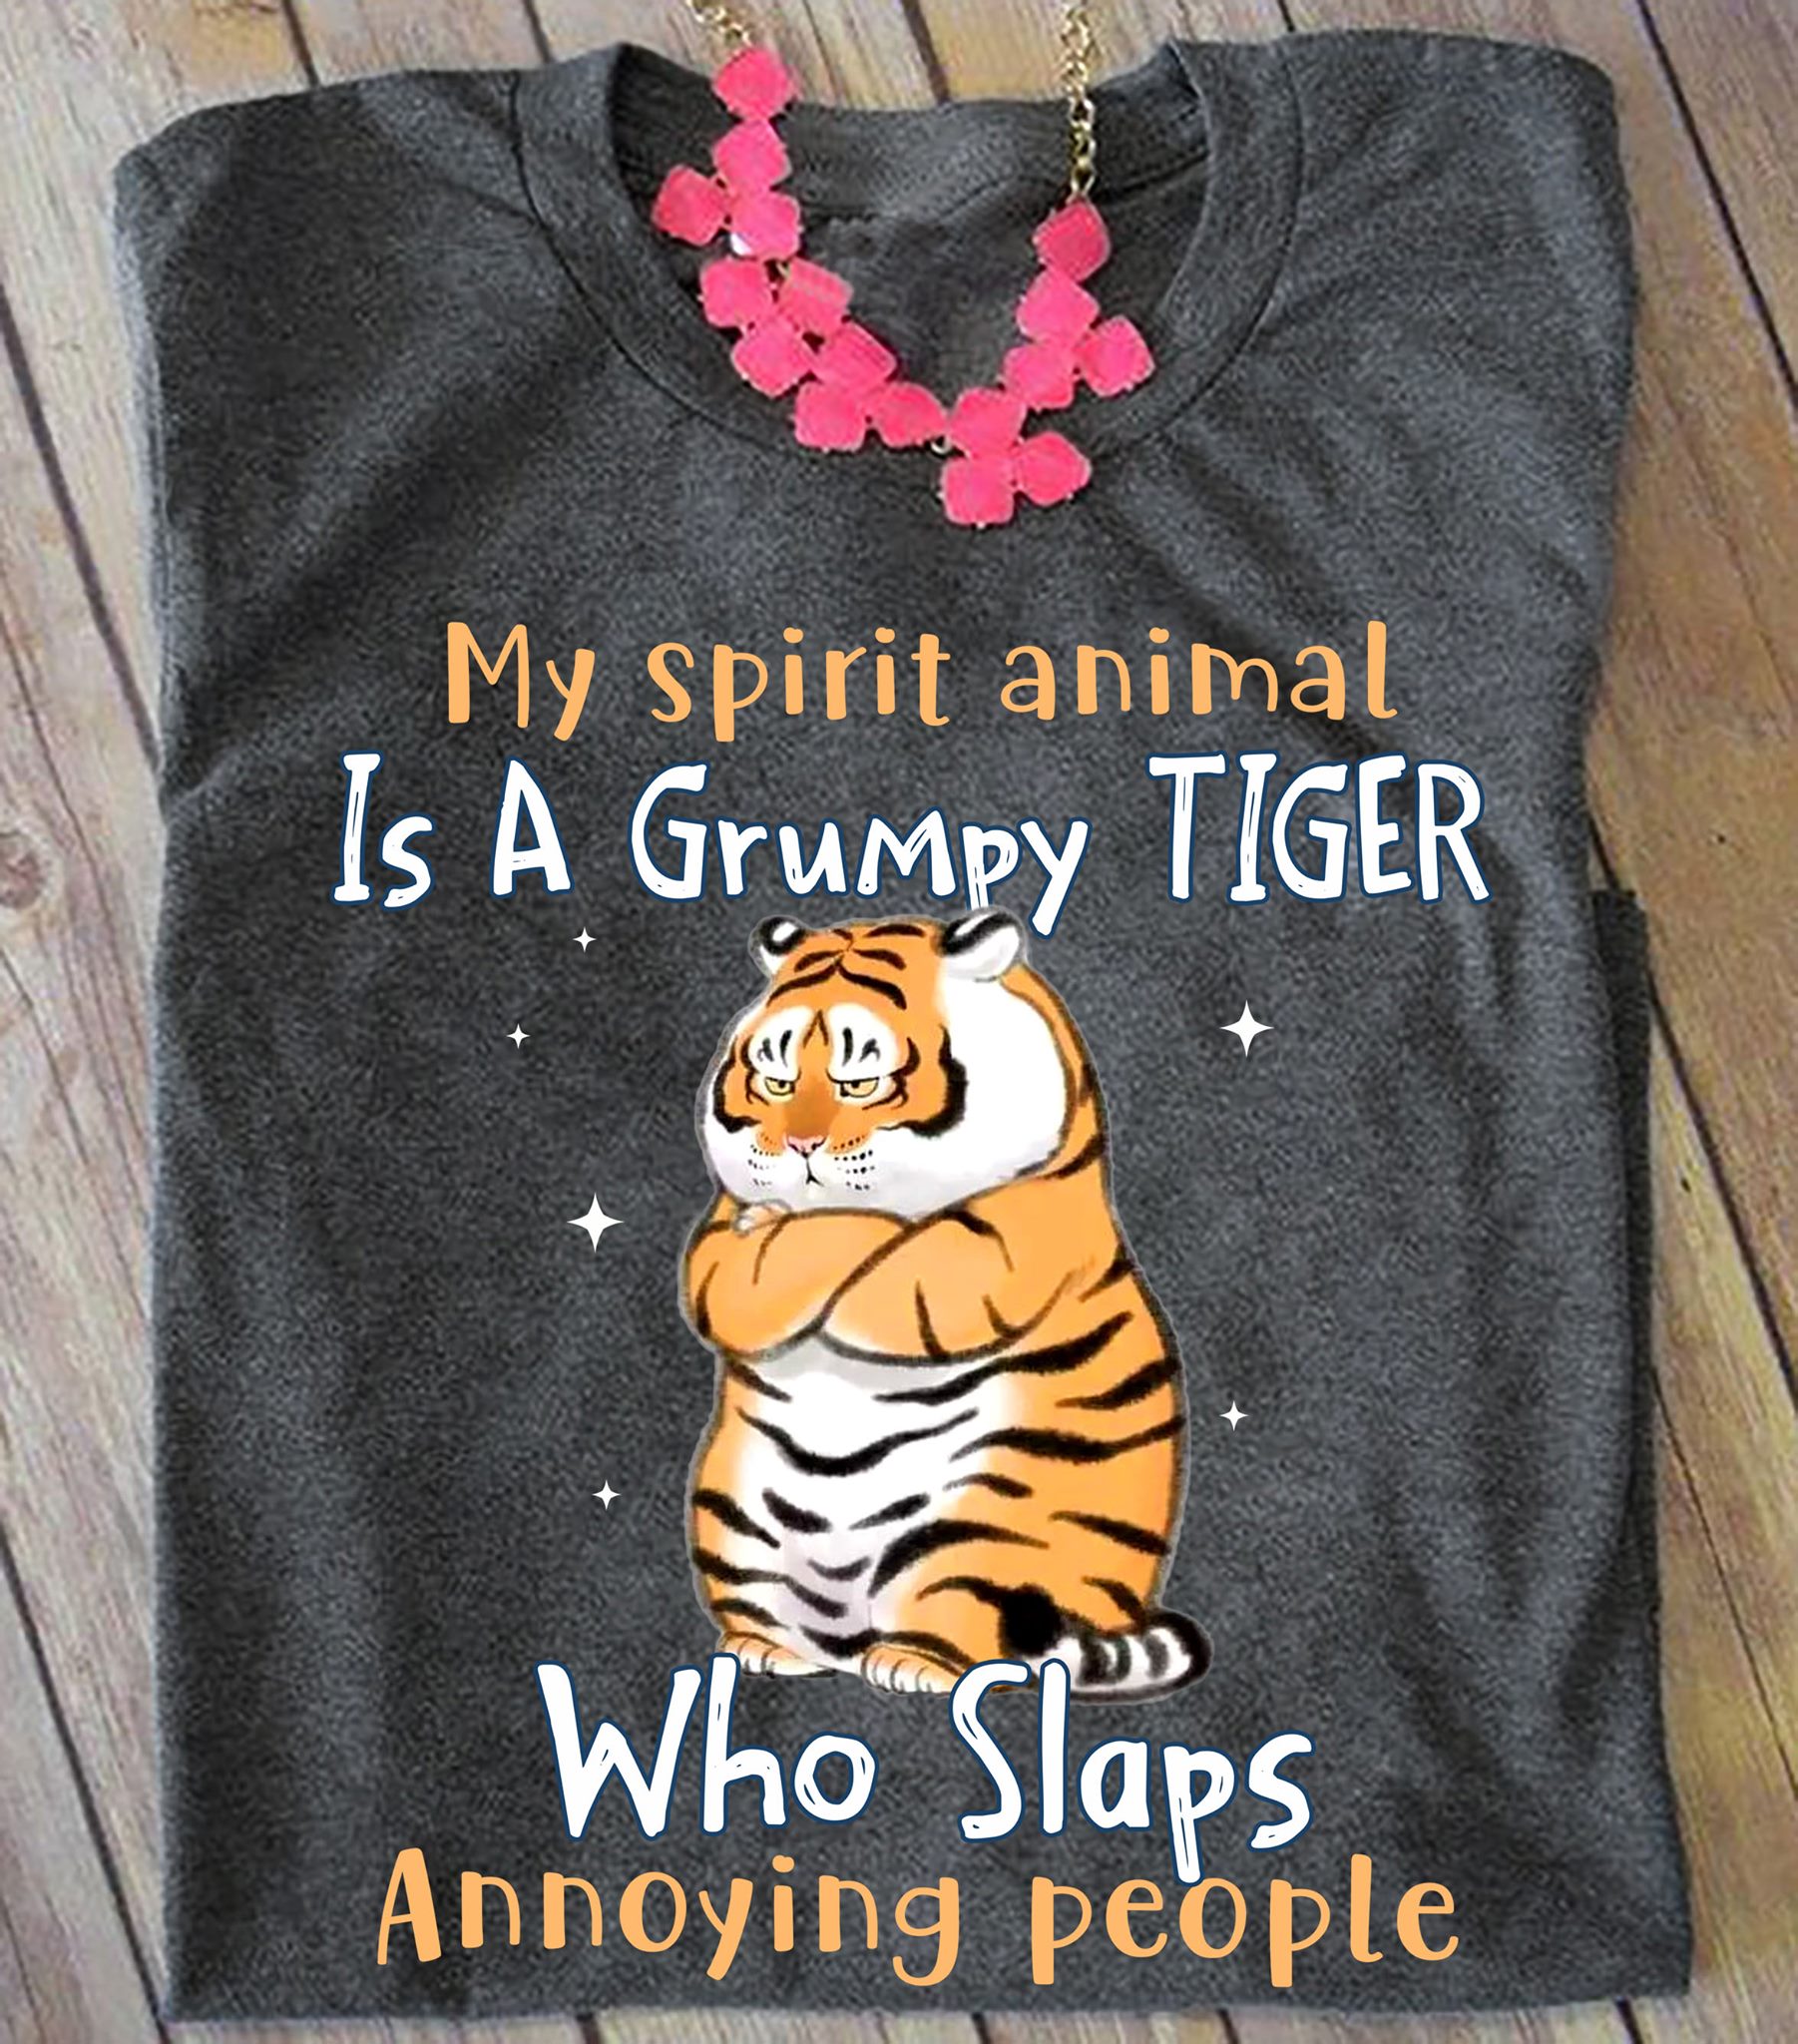 My spirit animal is a grumpy tiger who slaps annoying people